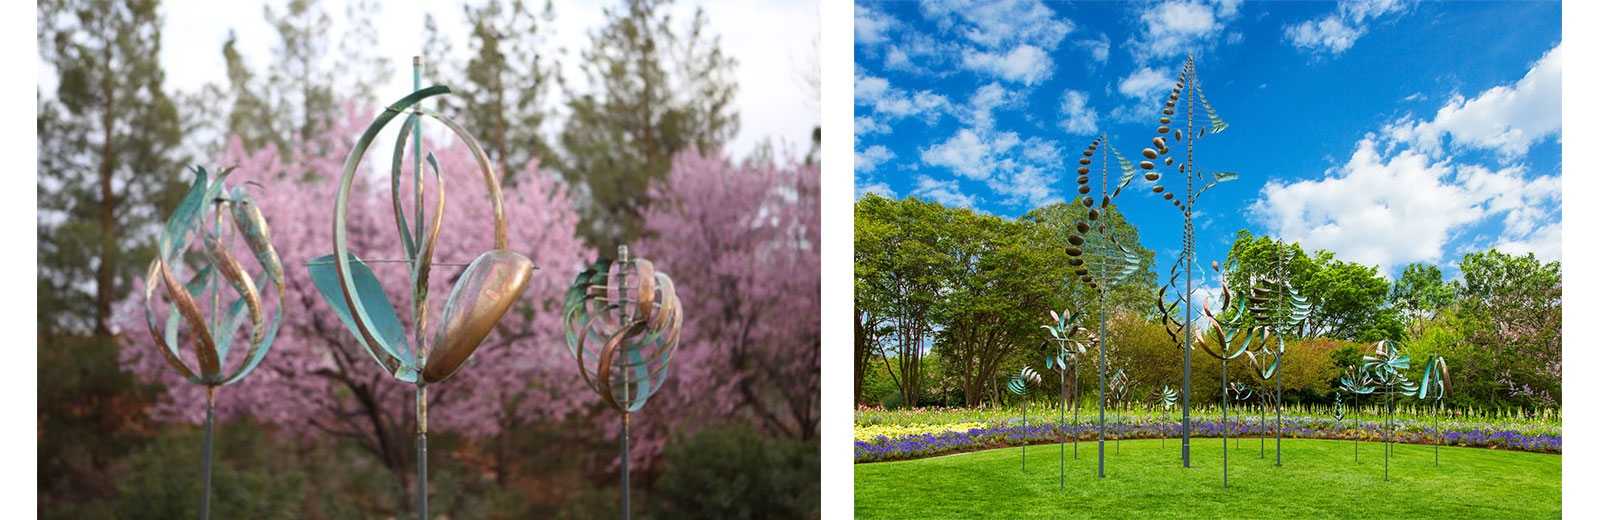 Kinetic Art for Your Garden - Leopold Wind Sculptures